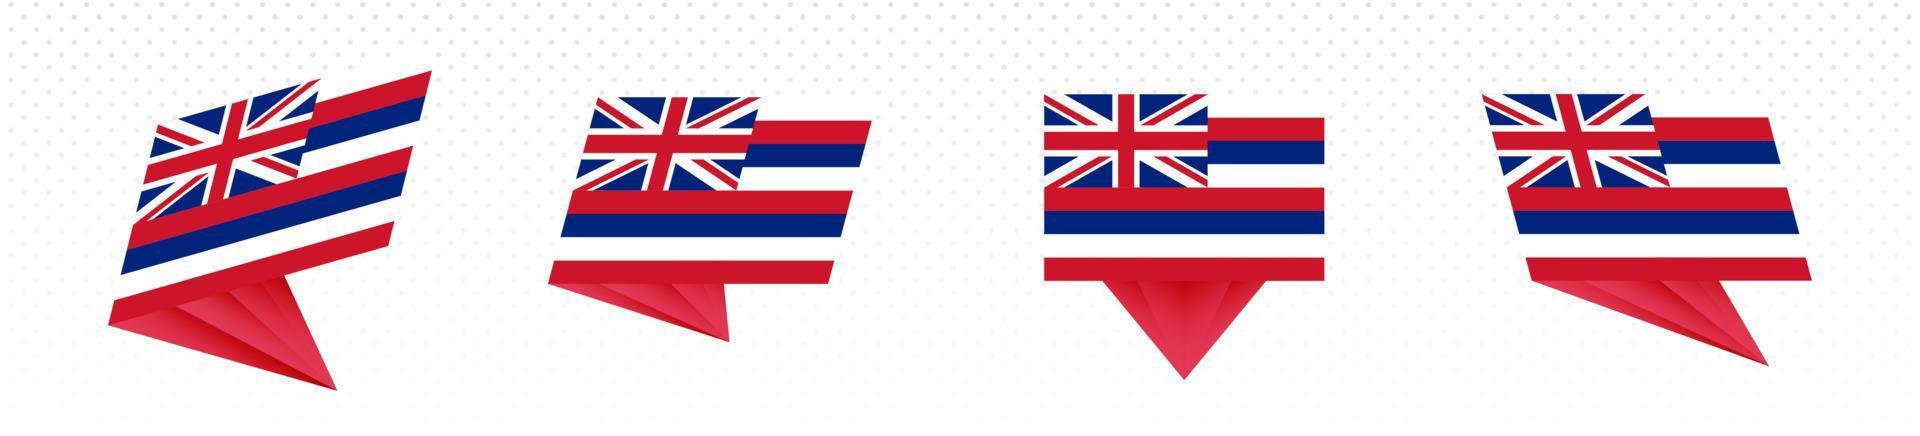 vlag van Hawaii ons staat in modern abstract ontwerp, vlag set. vector